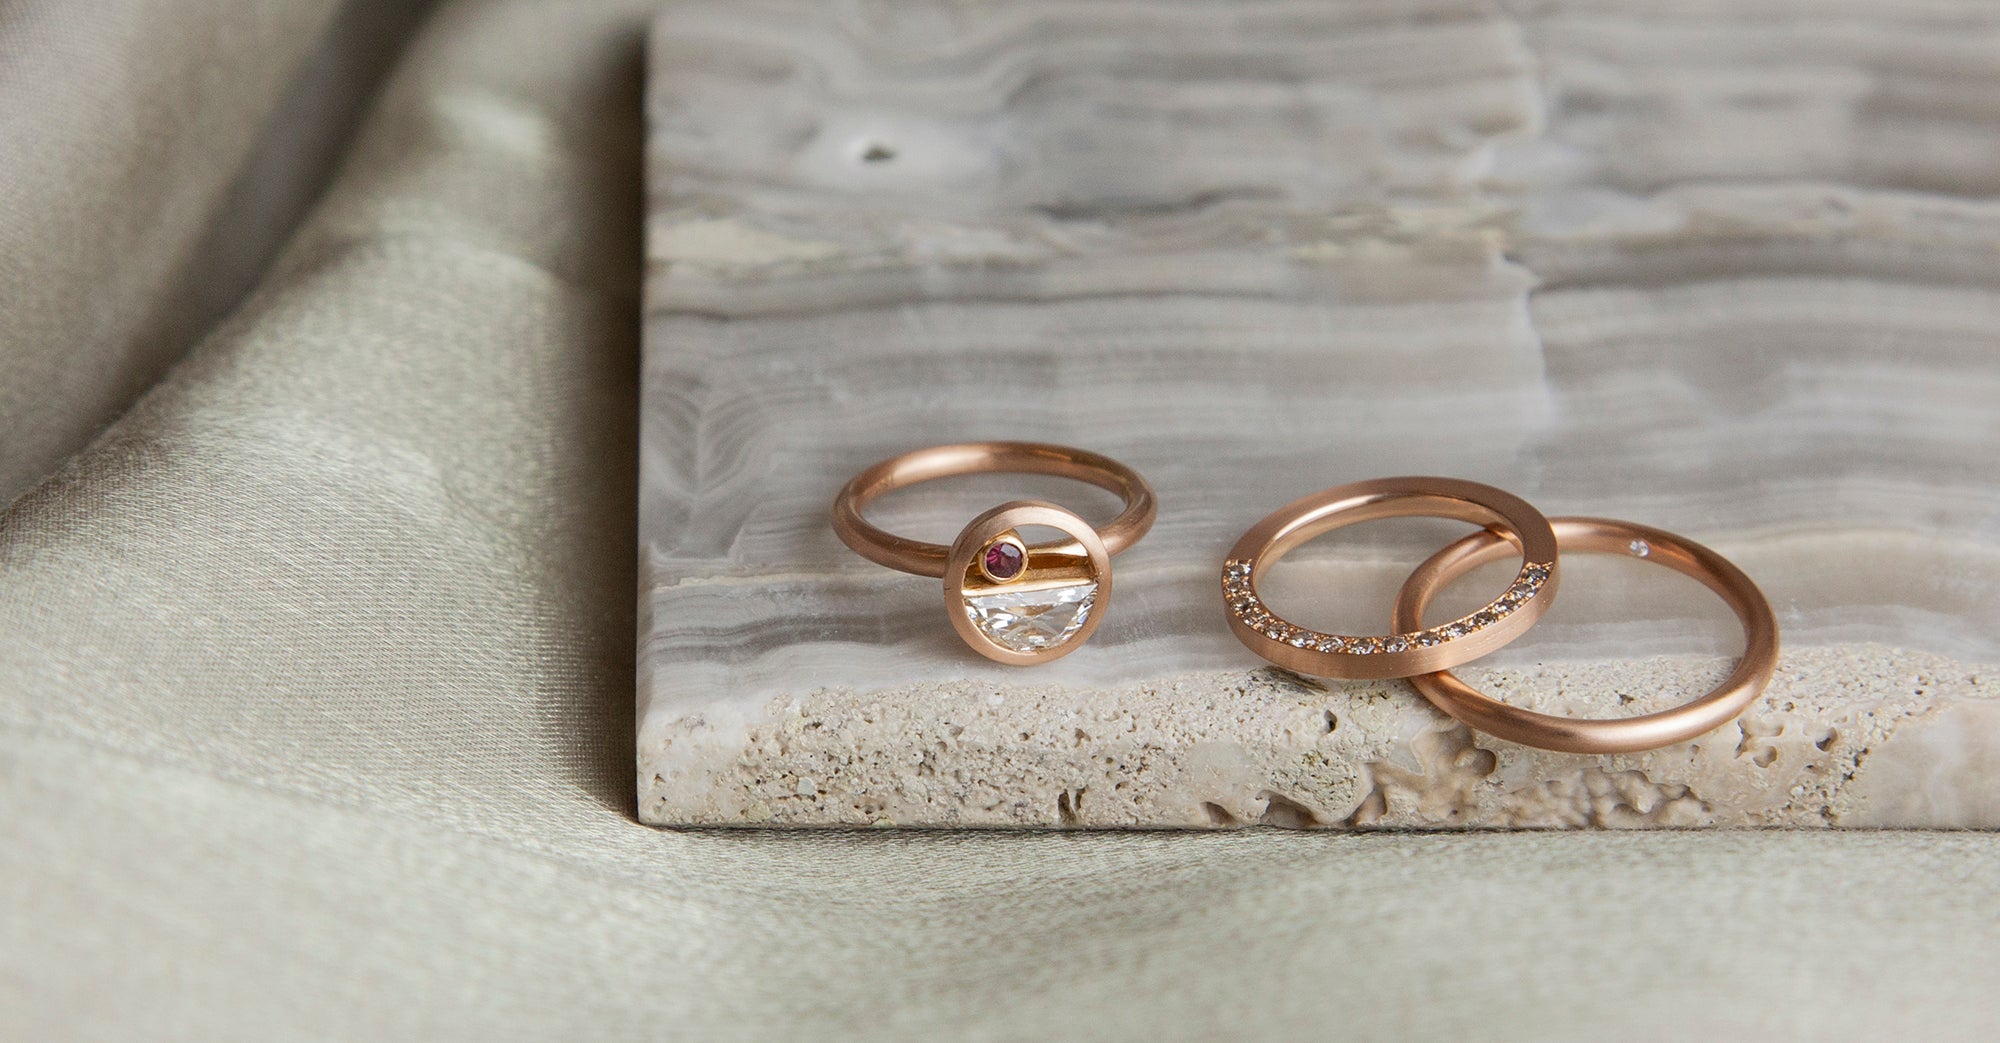 melanie katsalidis bespoke engagement ring wedding bands australian jewellery jeweller design designer